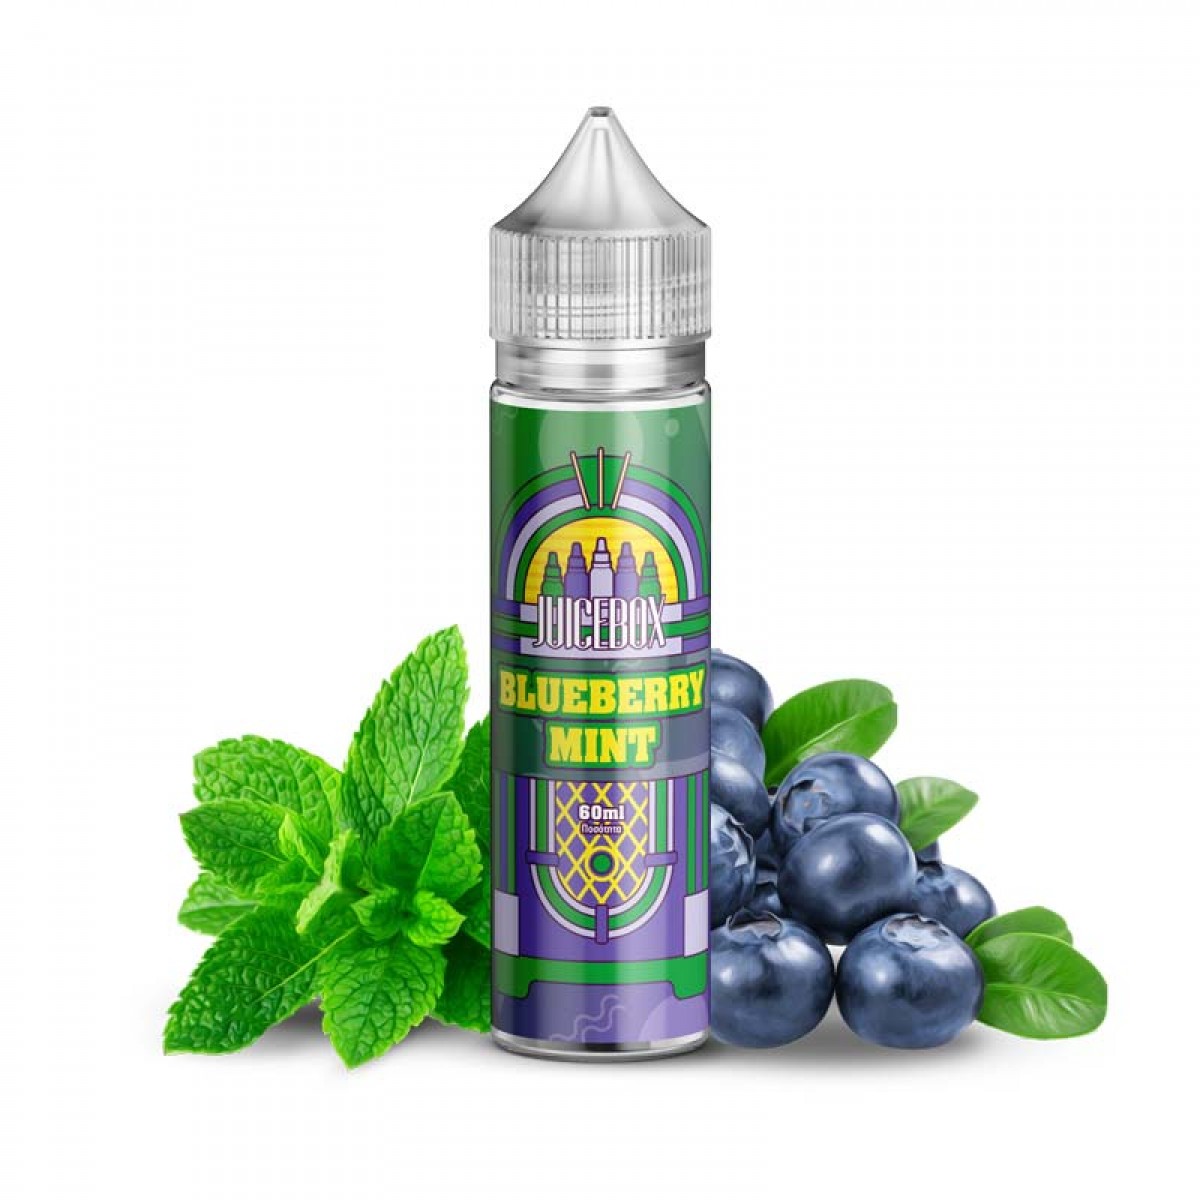 Juicebox Blueberry Mint flavorshot 12ml/60ml